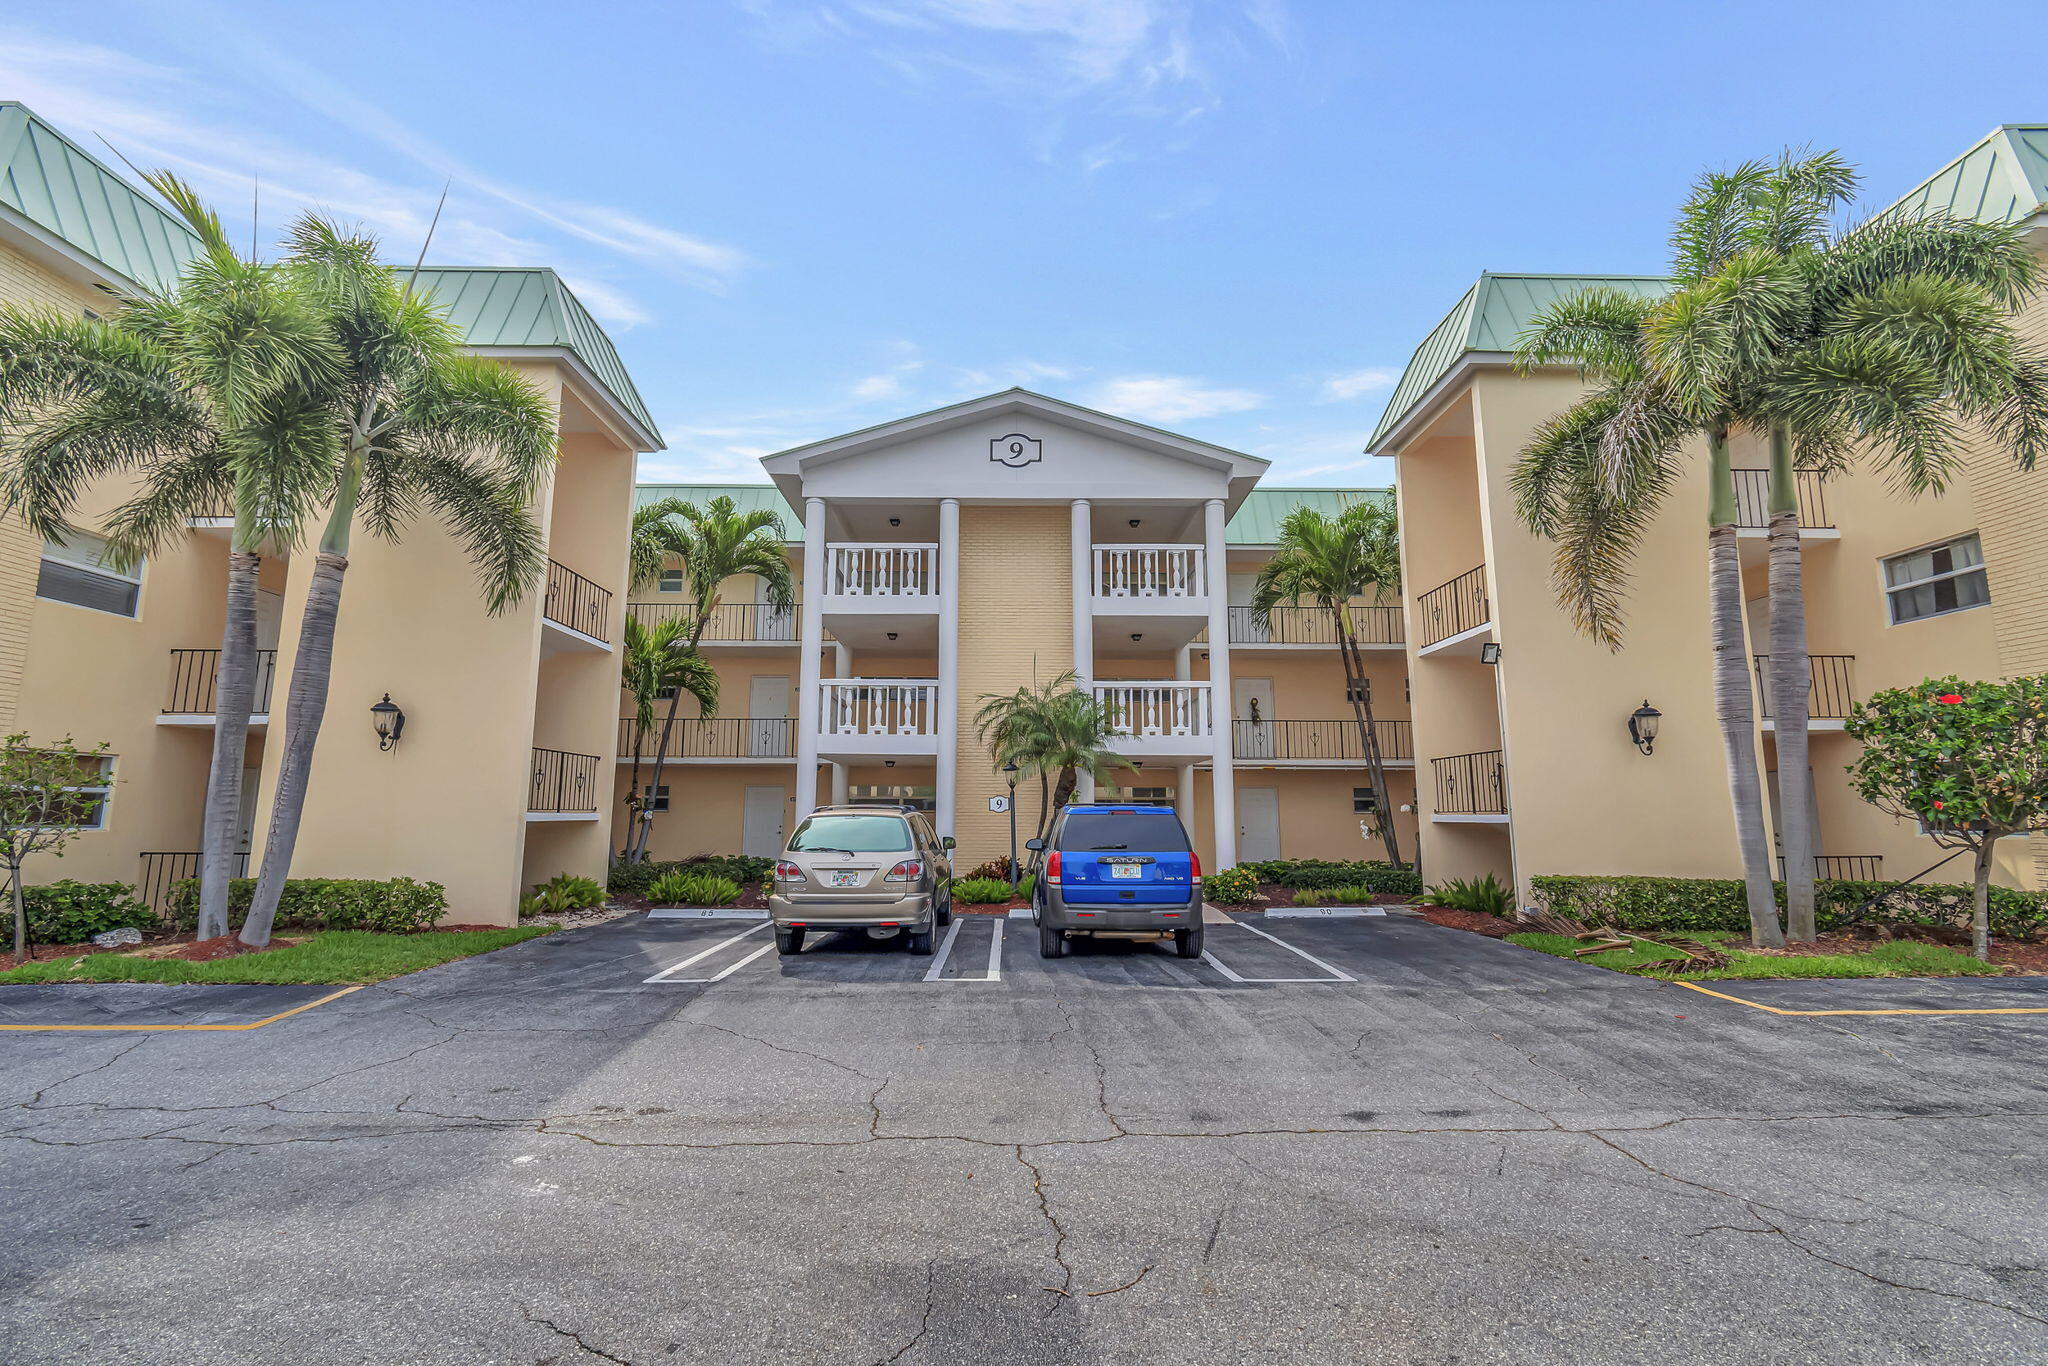 Property for Sale at 9 Colonial Club Drive 305, Boynton Beach, Palm Beach County, Florida - Bedrooms: 2 
Bathrooms: 2  - $370,000